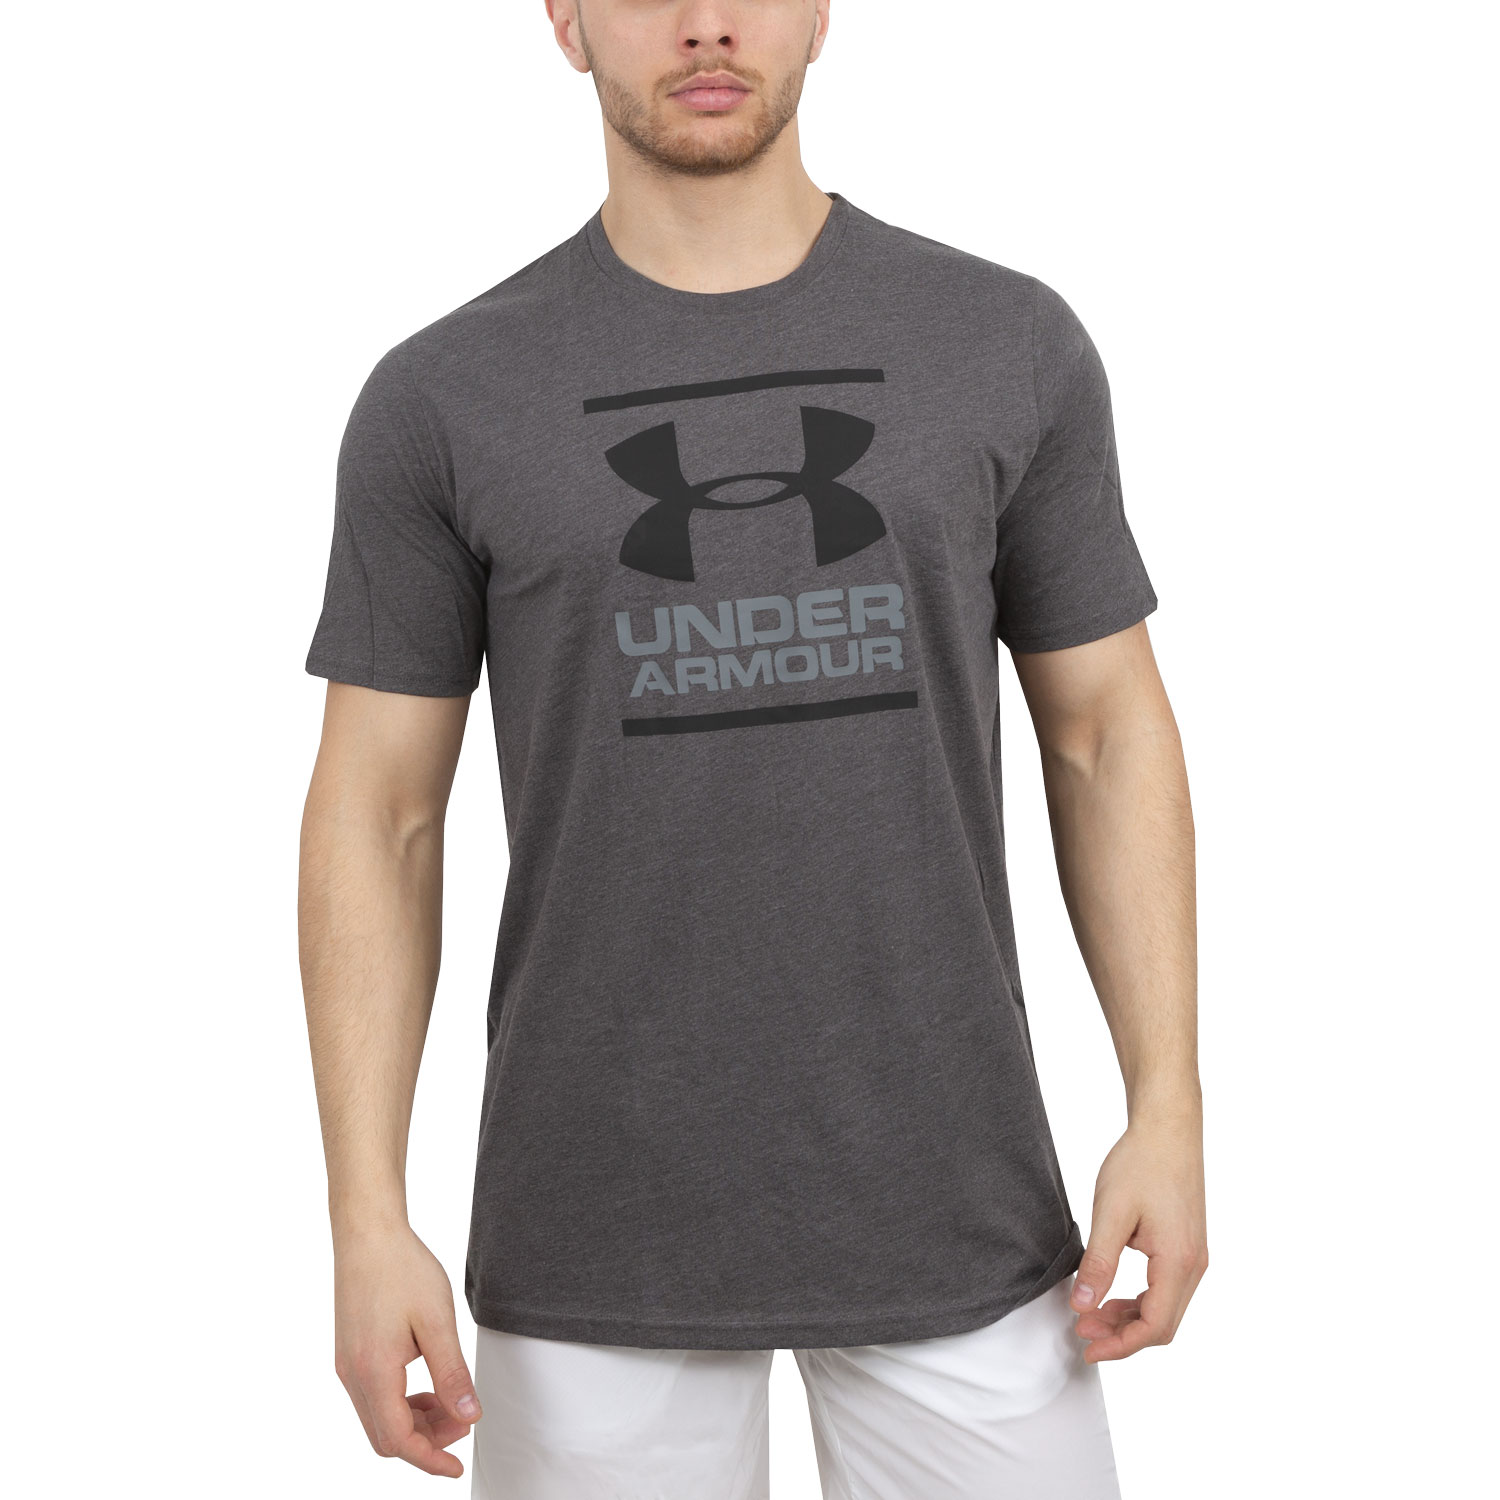 Under Armour Foundation Camiseta Hombre - Dark Grey/Black